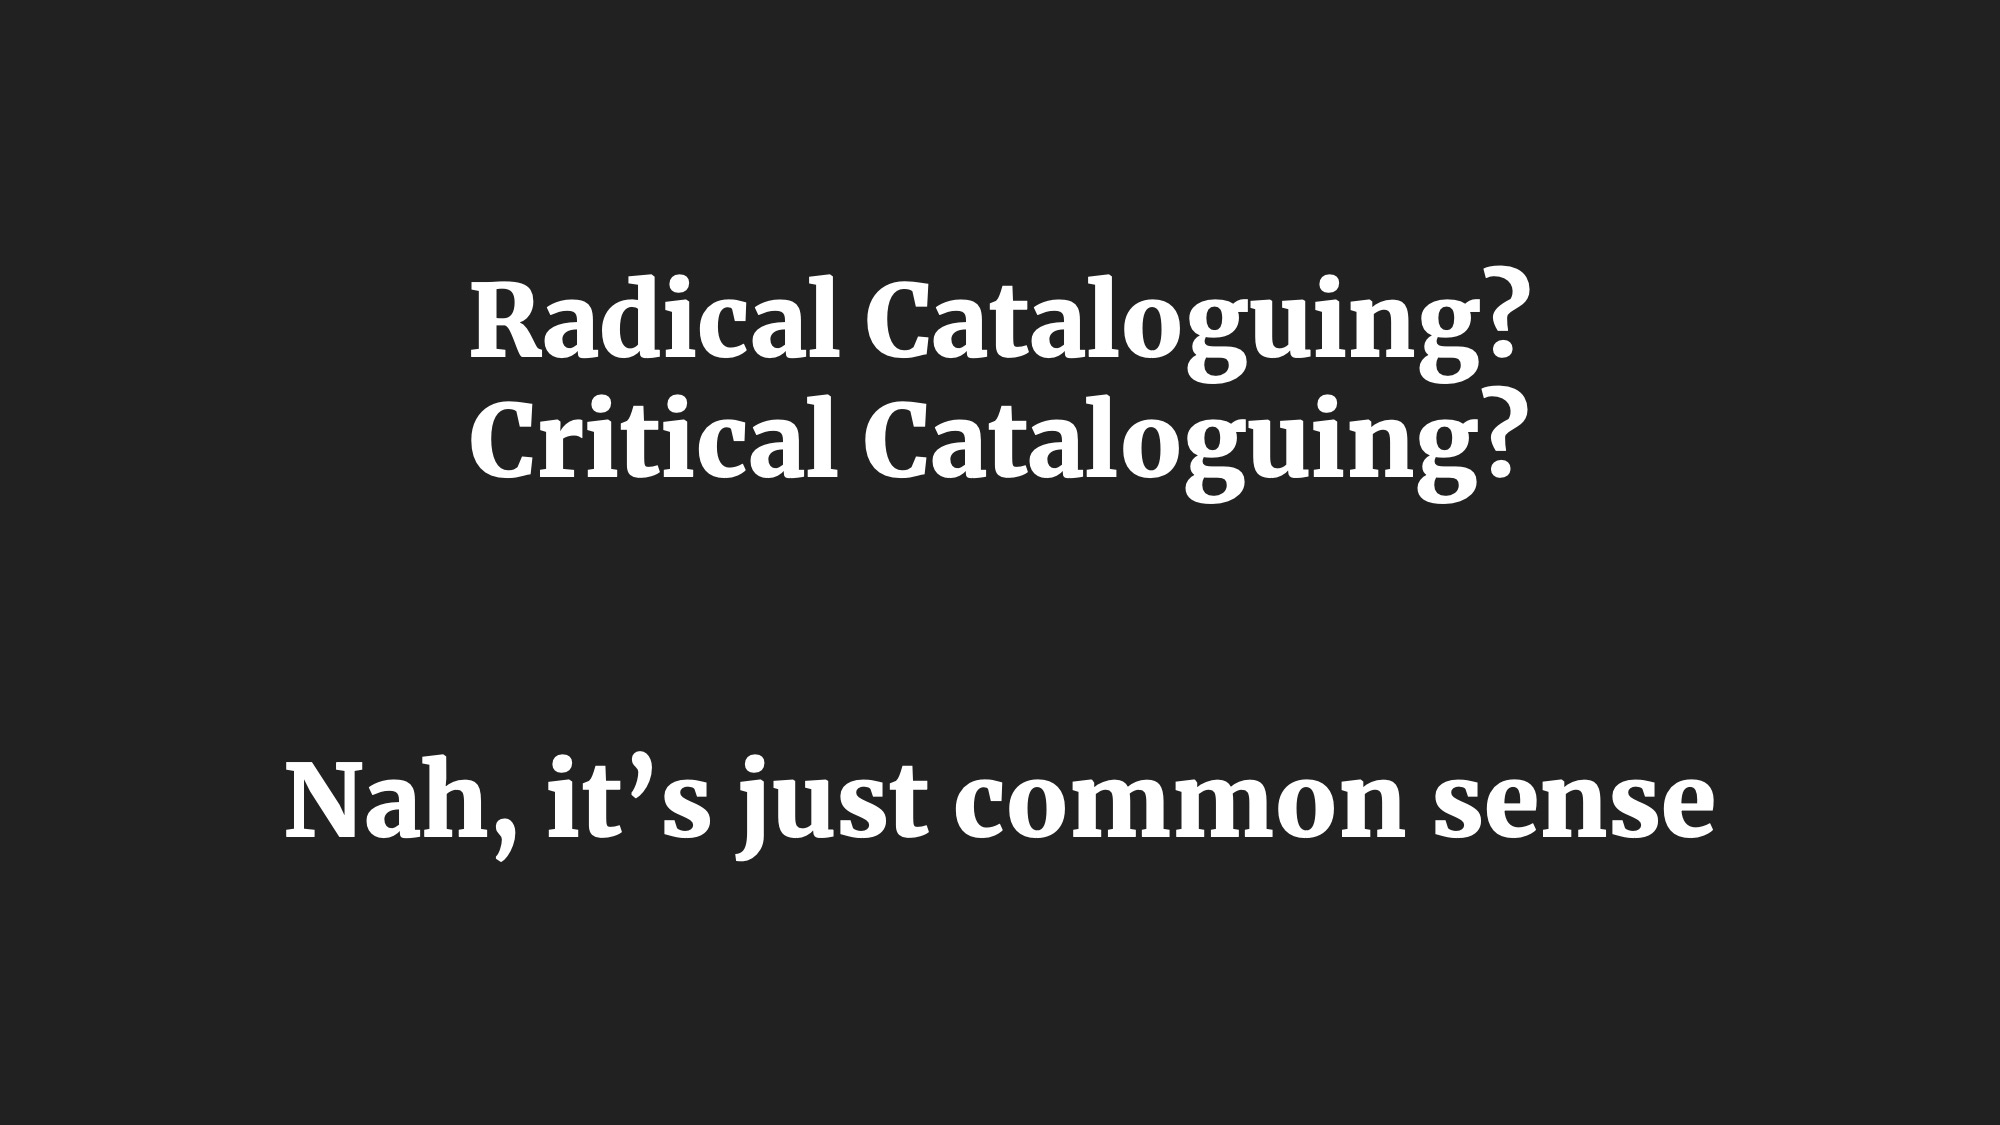 Radical Cataloguing? Critical Cataloguing?
Nah, it’s just common sense